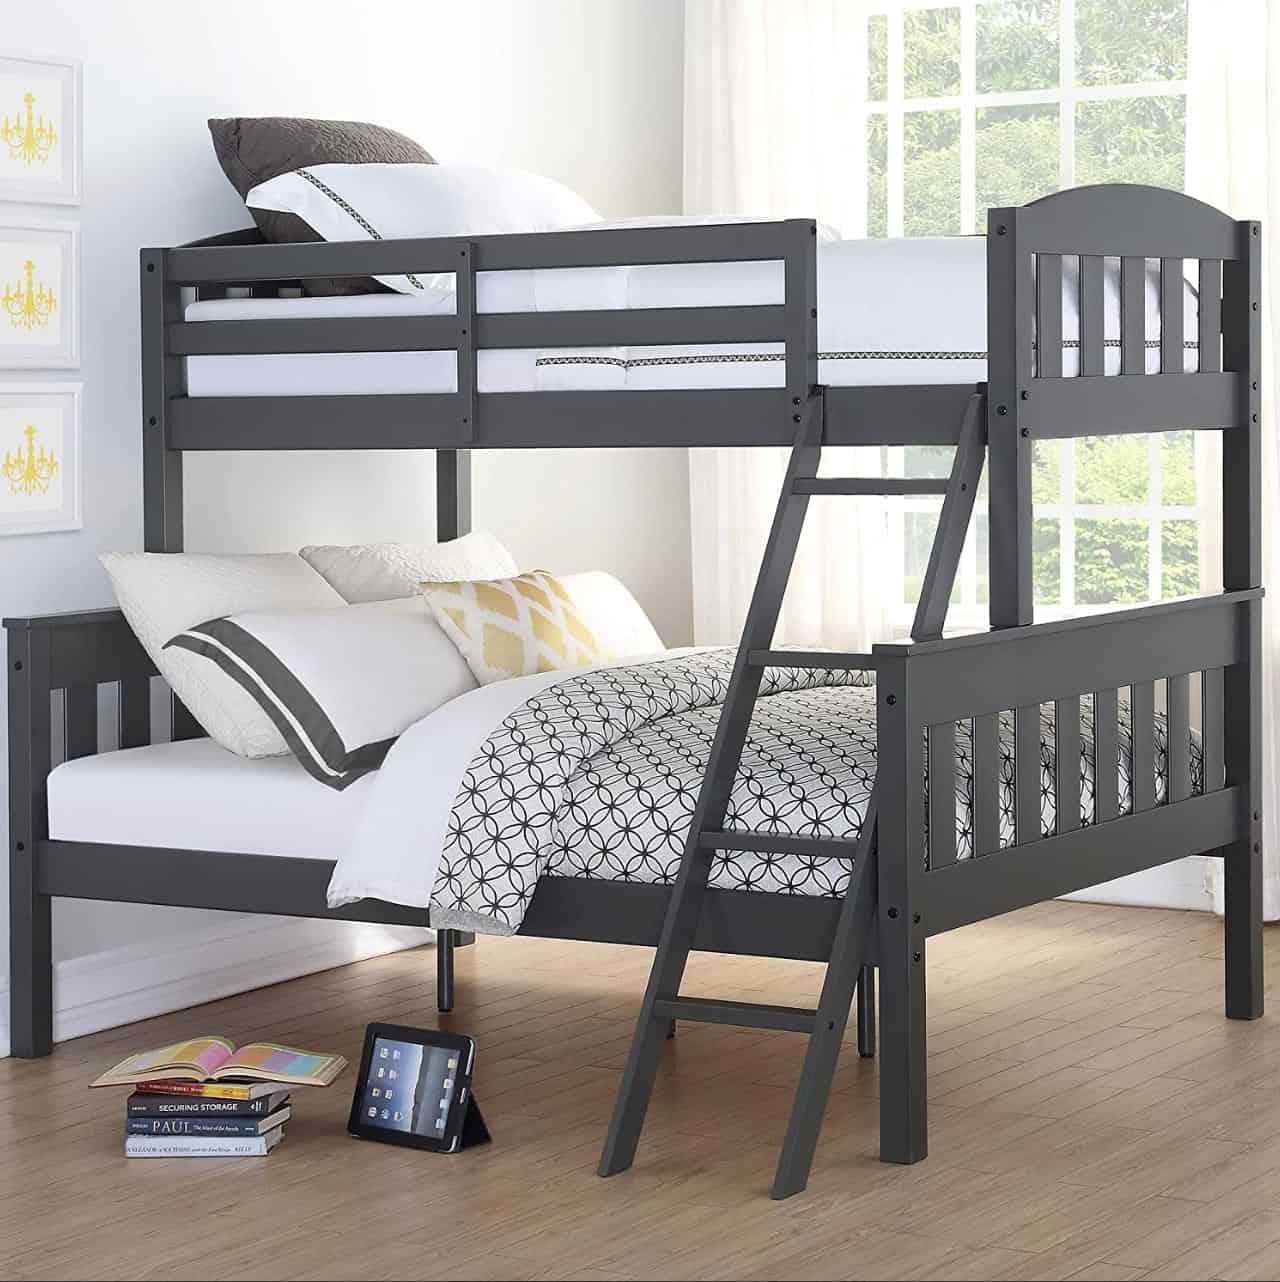 Kid bedroom sleeping furniture for three